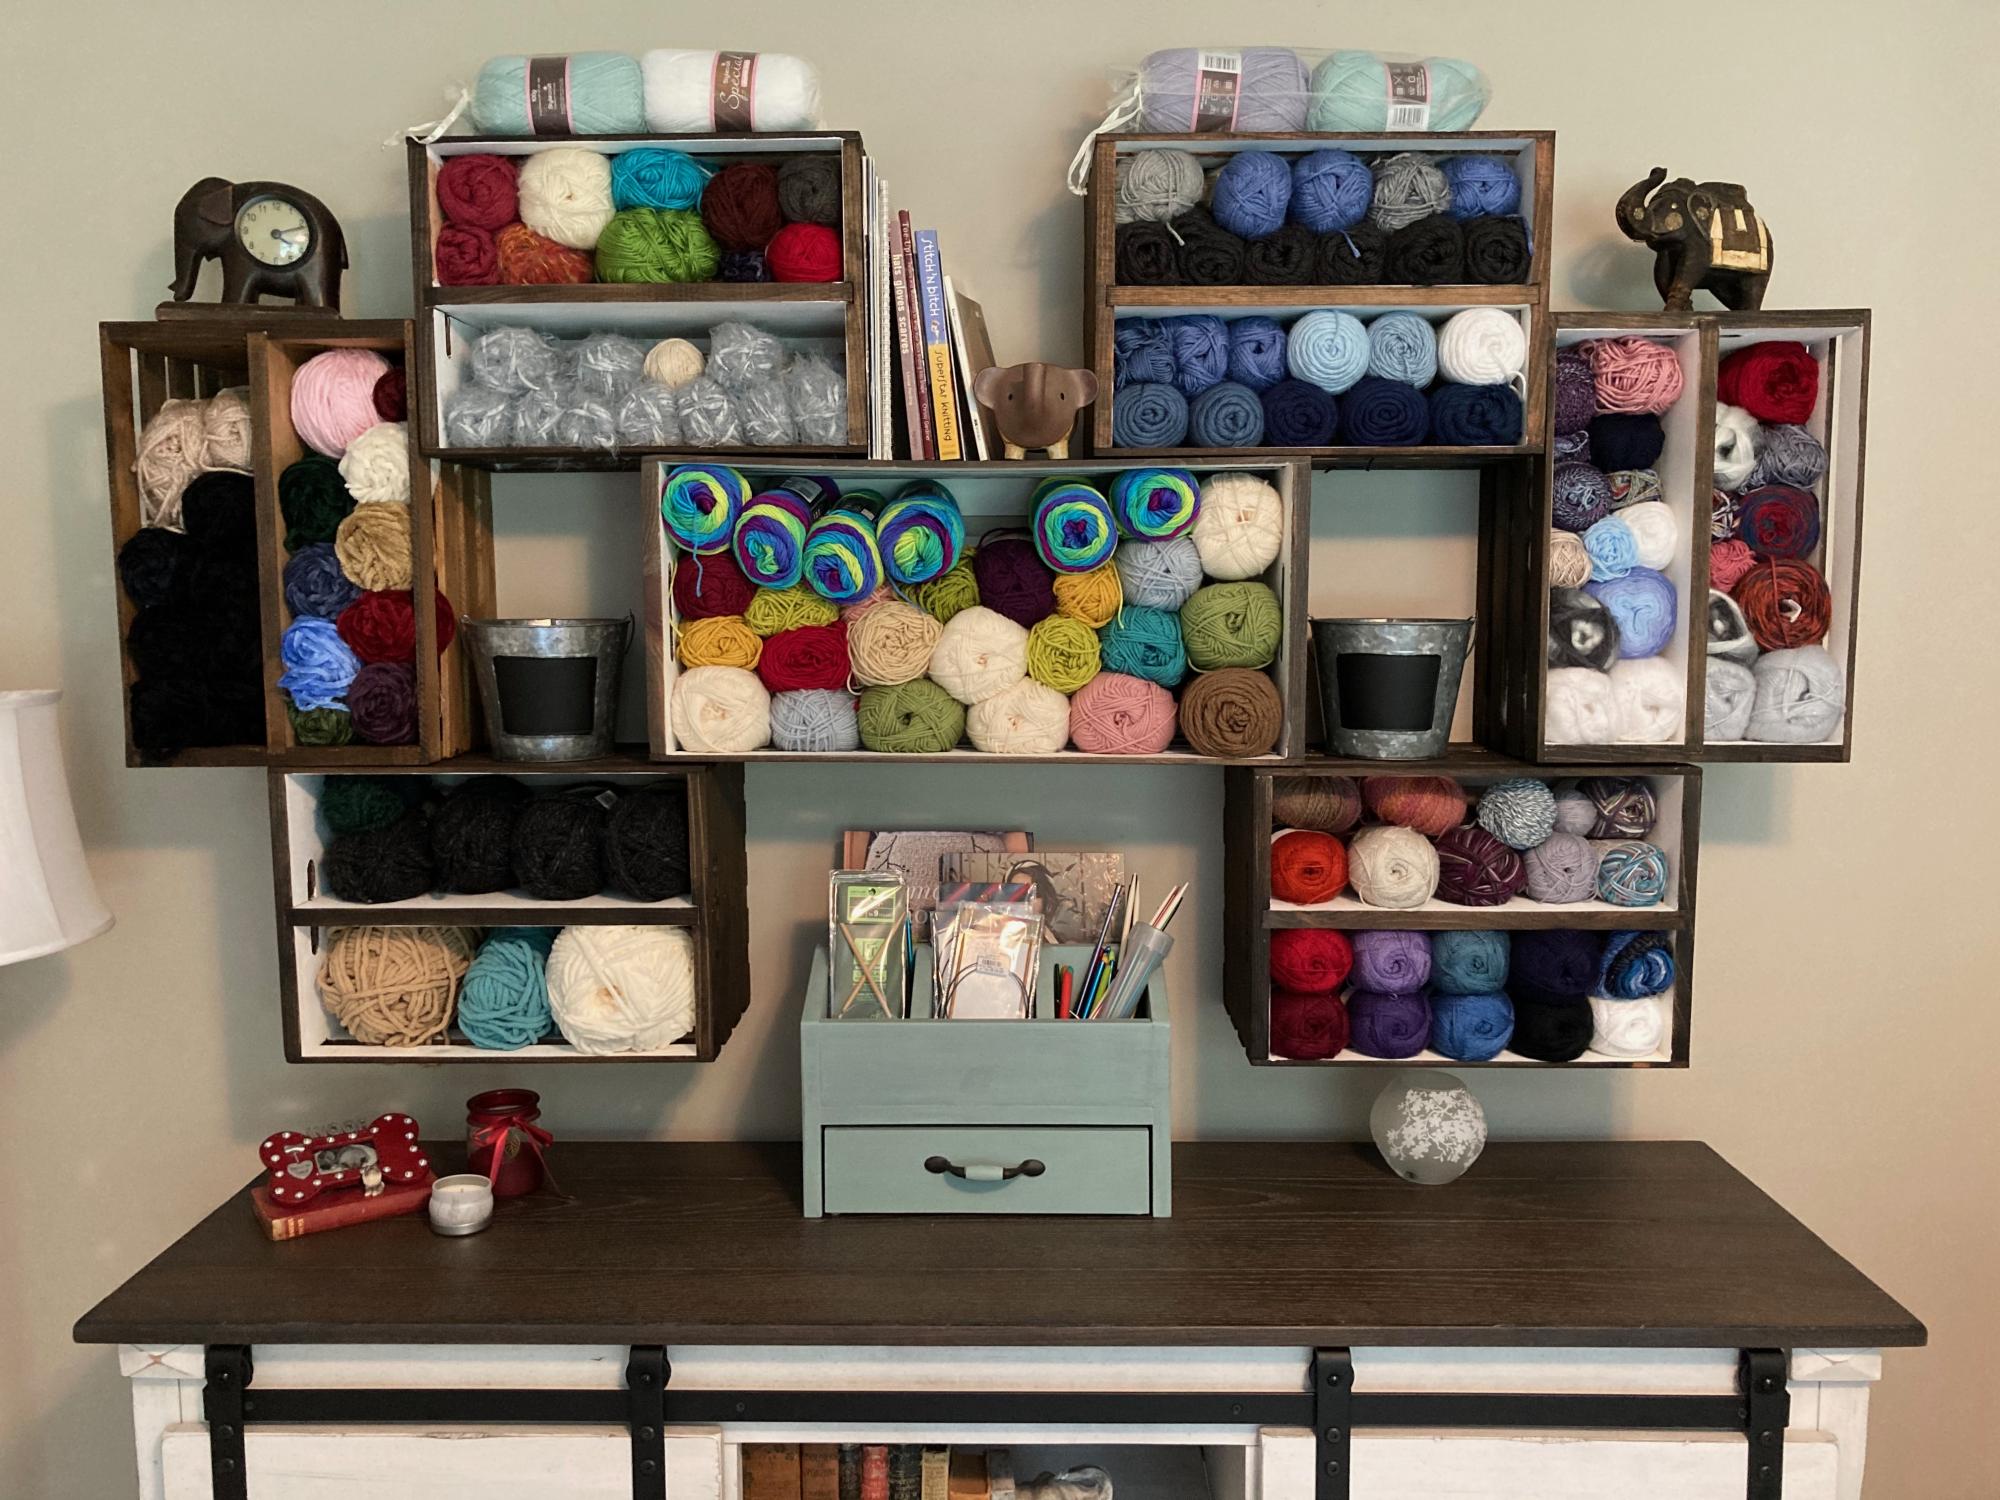 Crochet Organizer, Knitting Kit Organizer, Crochet Sewing